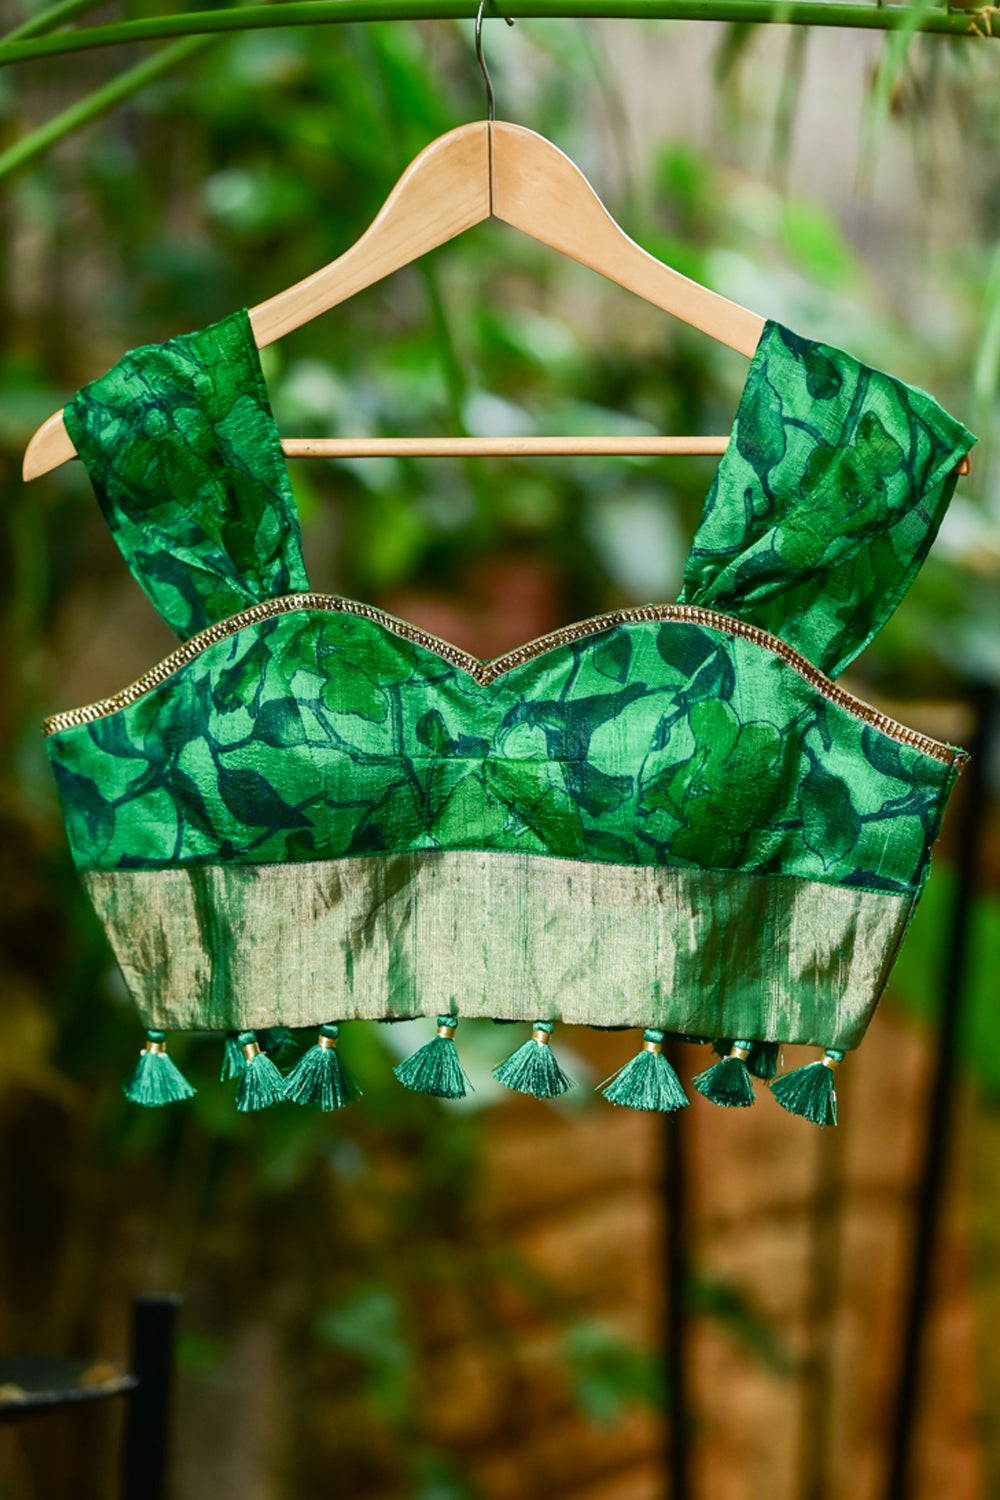 Green pure rawsilk fan strap blouse with tassels detailing